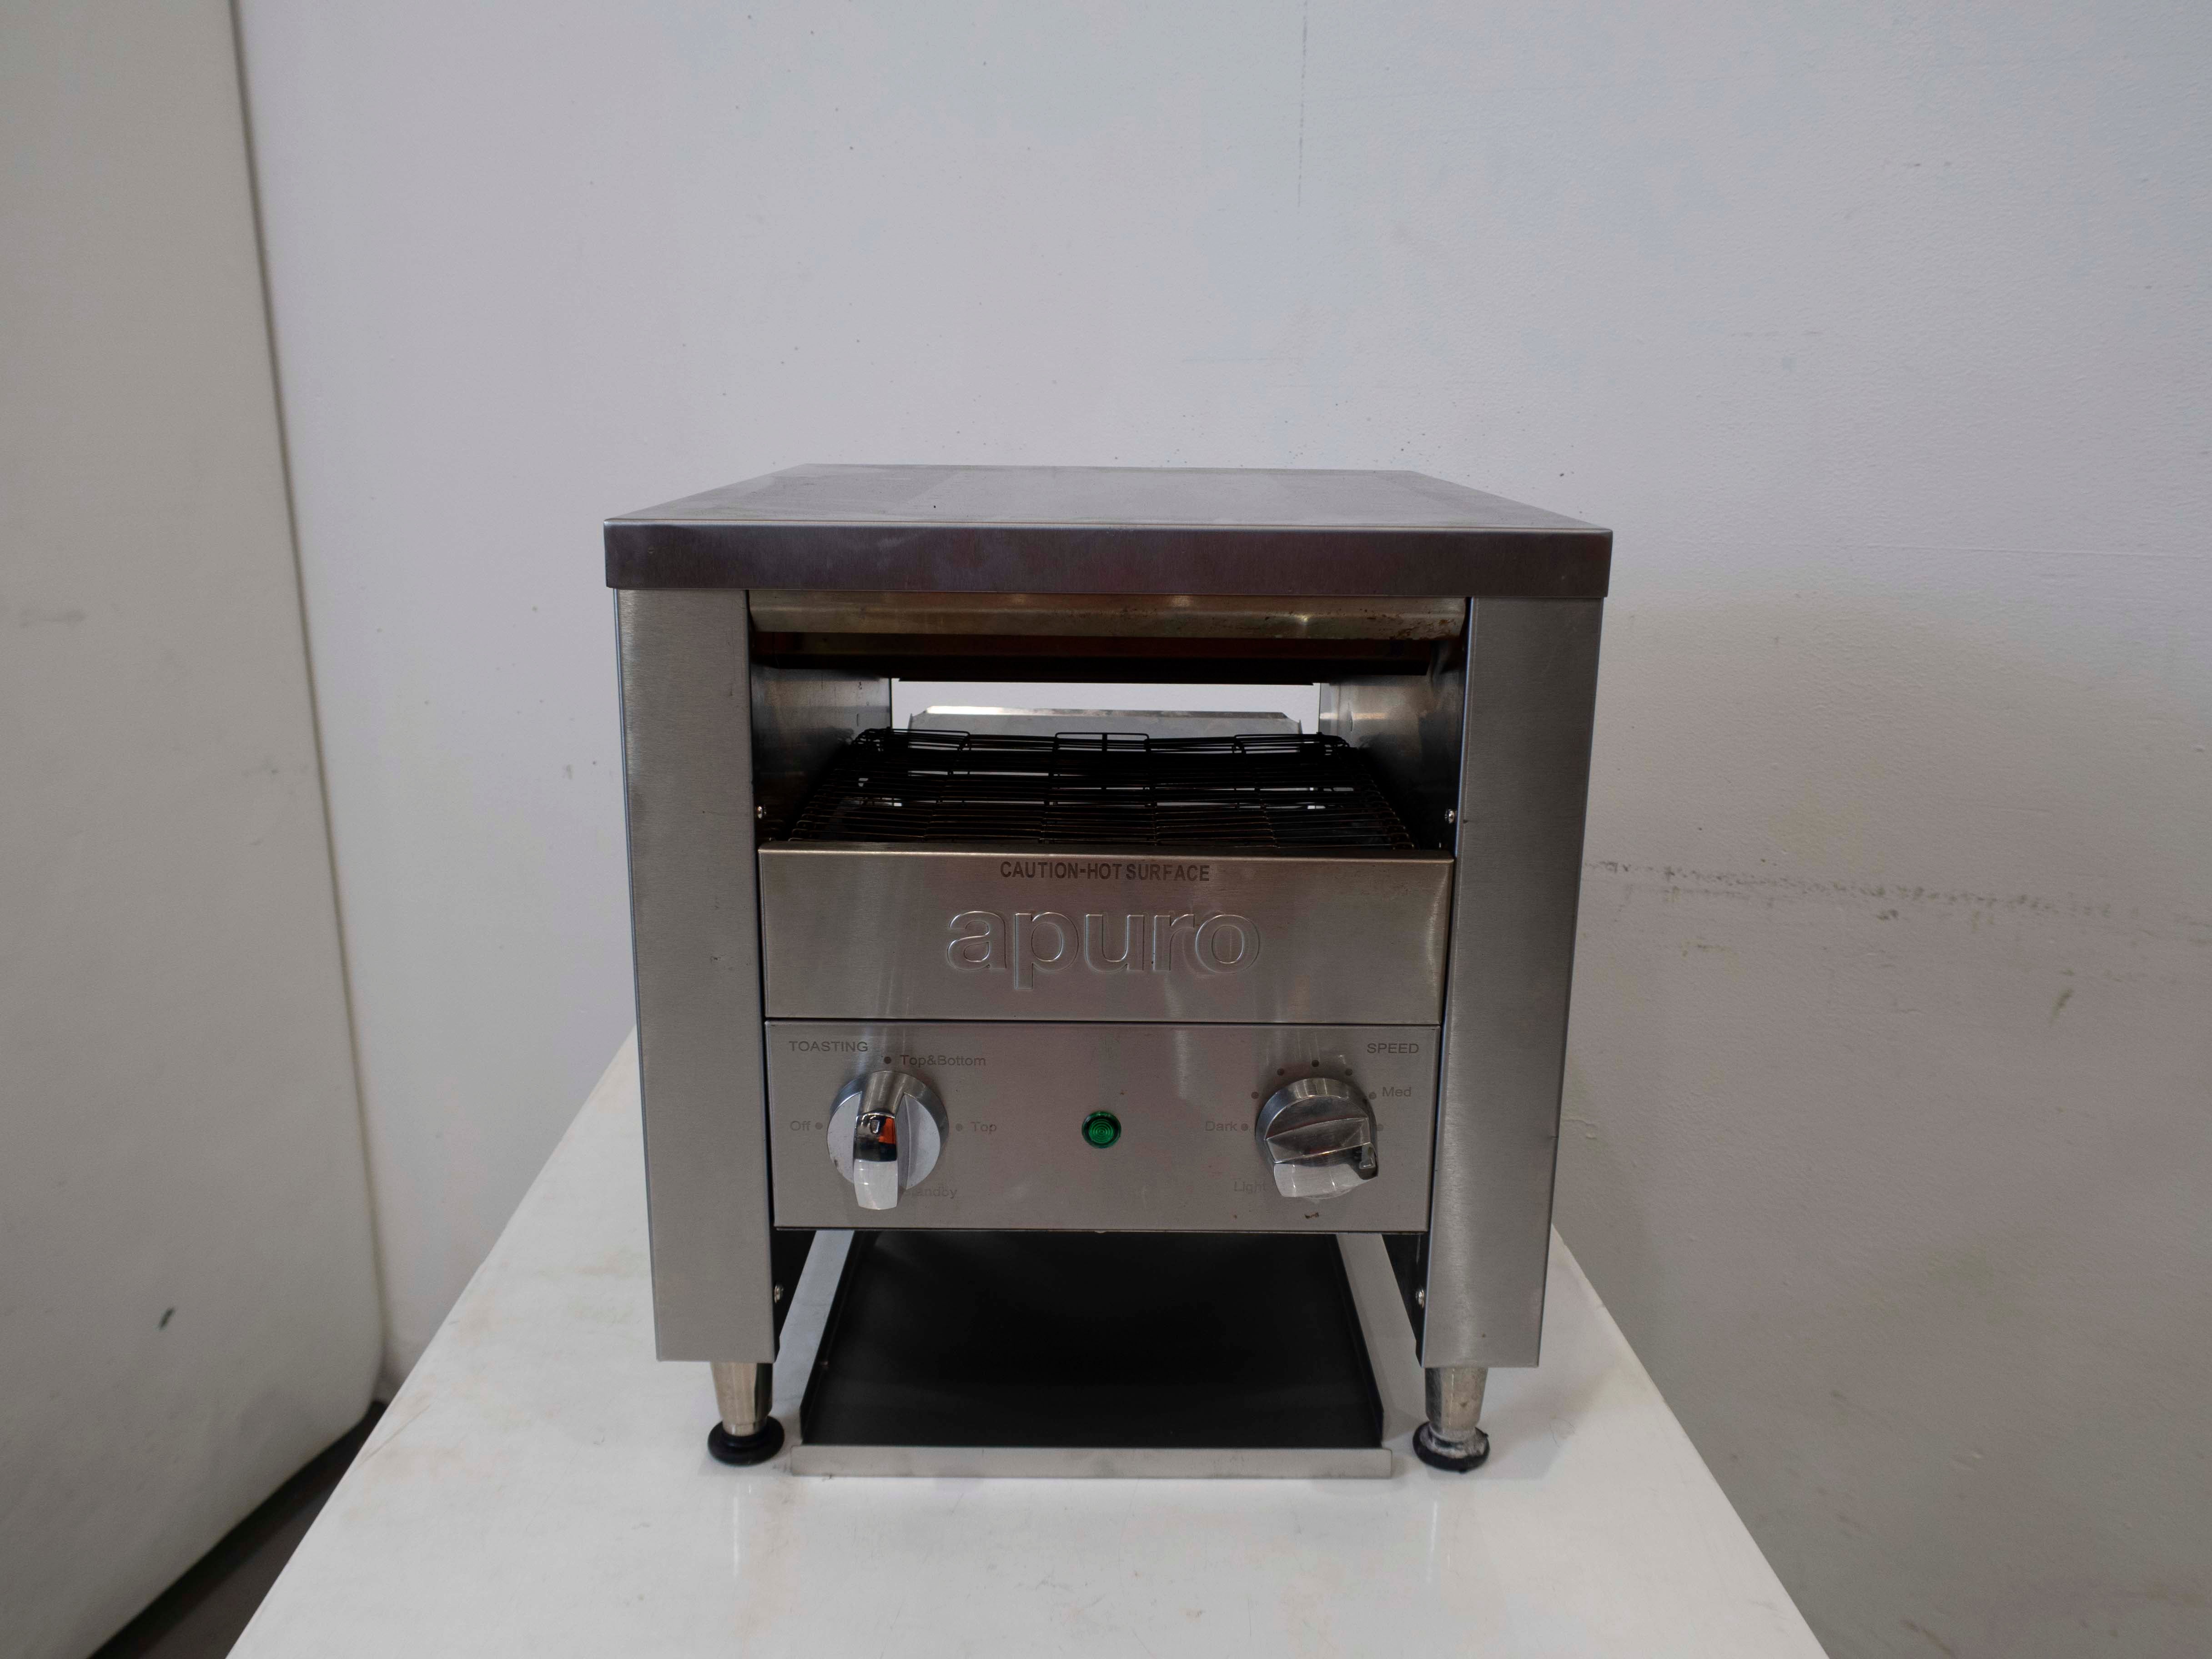 Thumbnail - Apuro DG074-A Conveyor Toaster